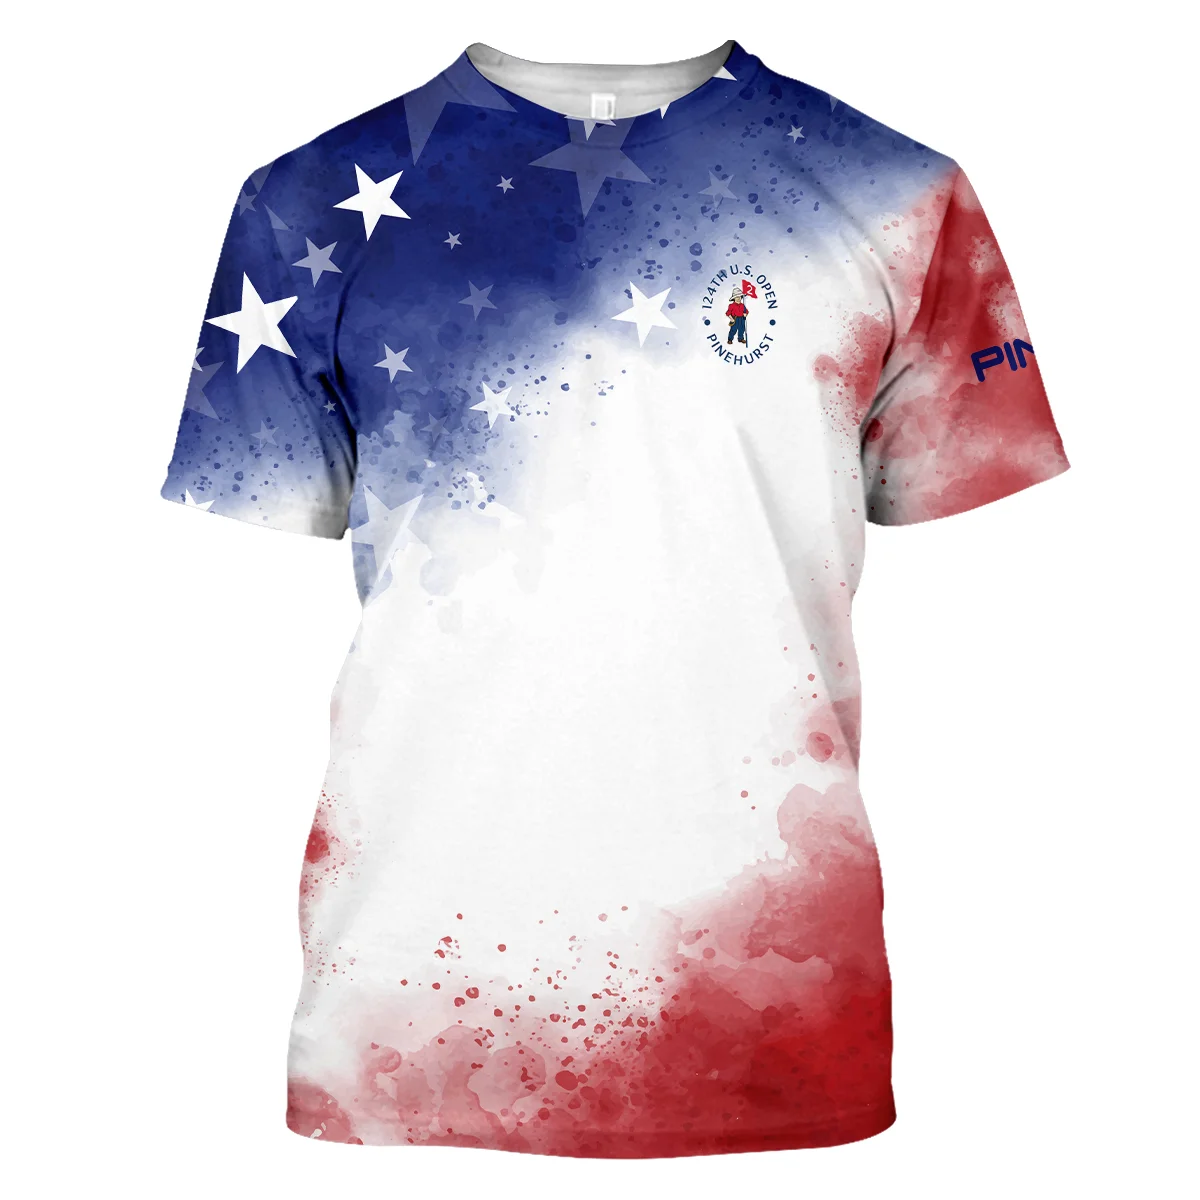 124th U.S. Open Pinehurst Ping Blue Red Watercolor Star White Backgound Unisex T-Shirt Style Classic T-Shirt